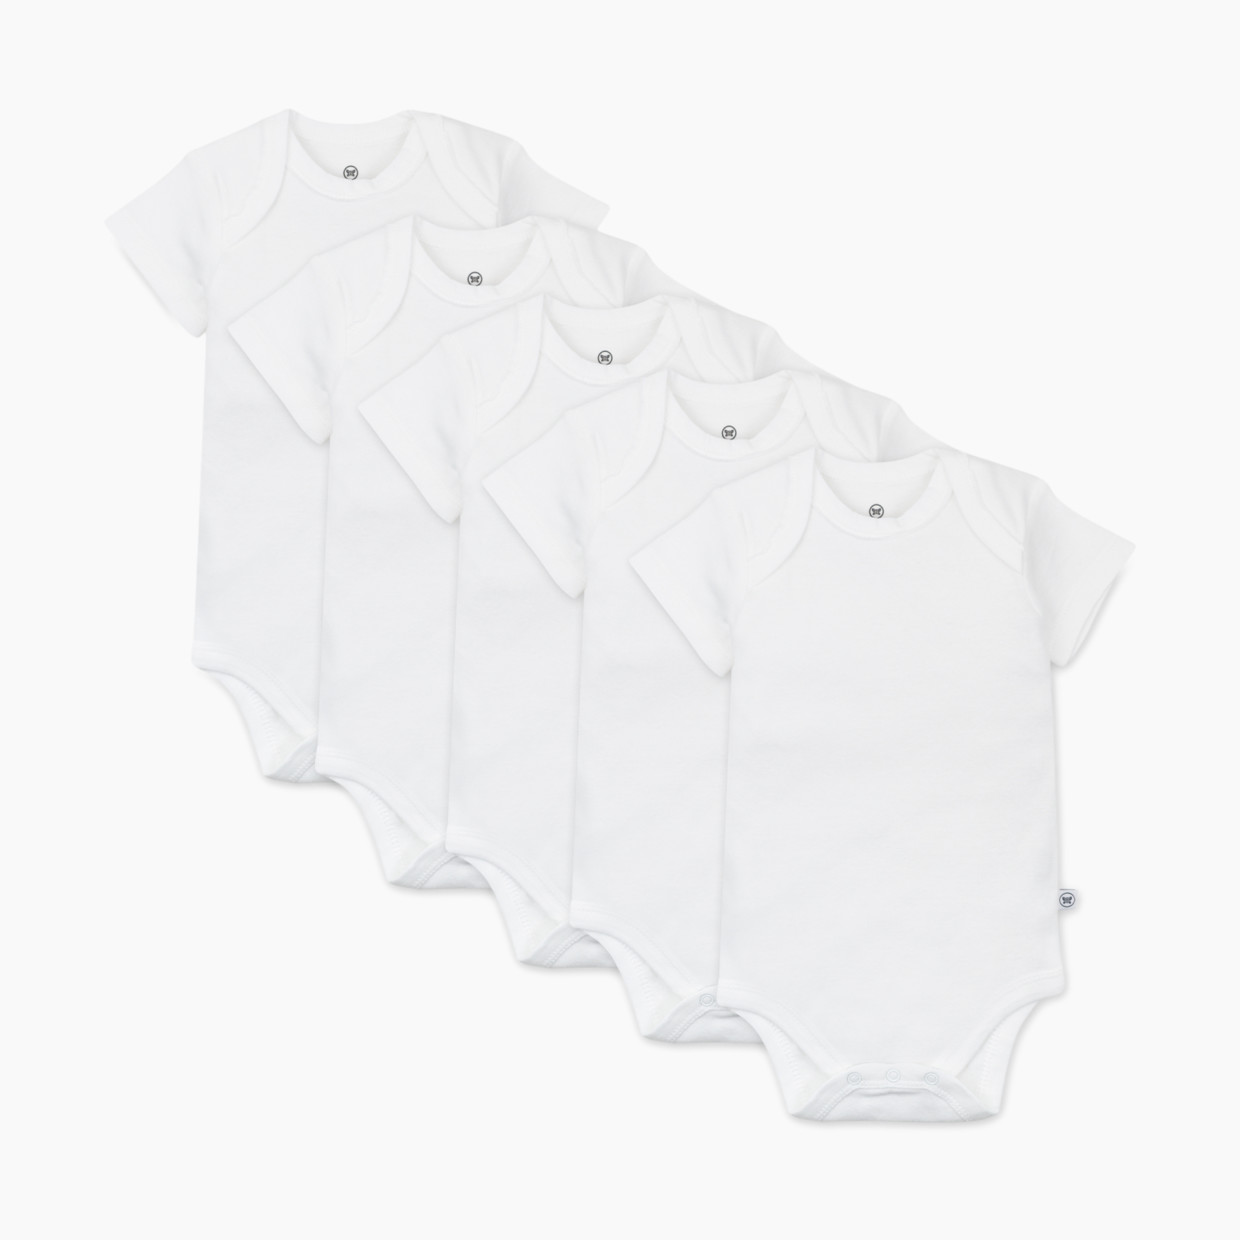 Honest Baby Clothing 5-Pack Organic Cotton Short Sleeve Bodysuit - Bright White, 0-3 M, 5.